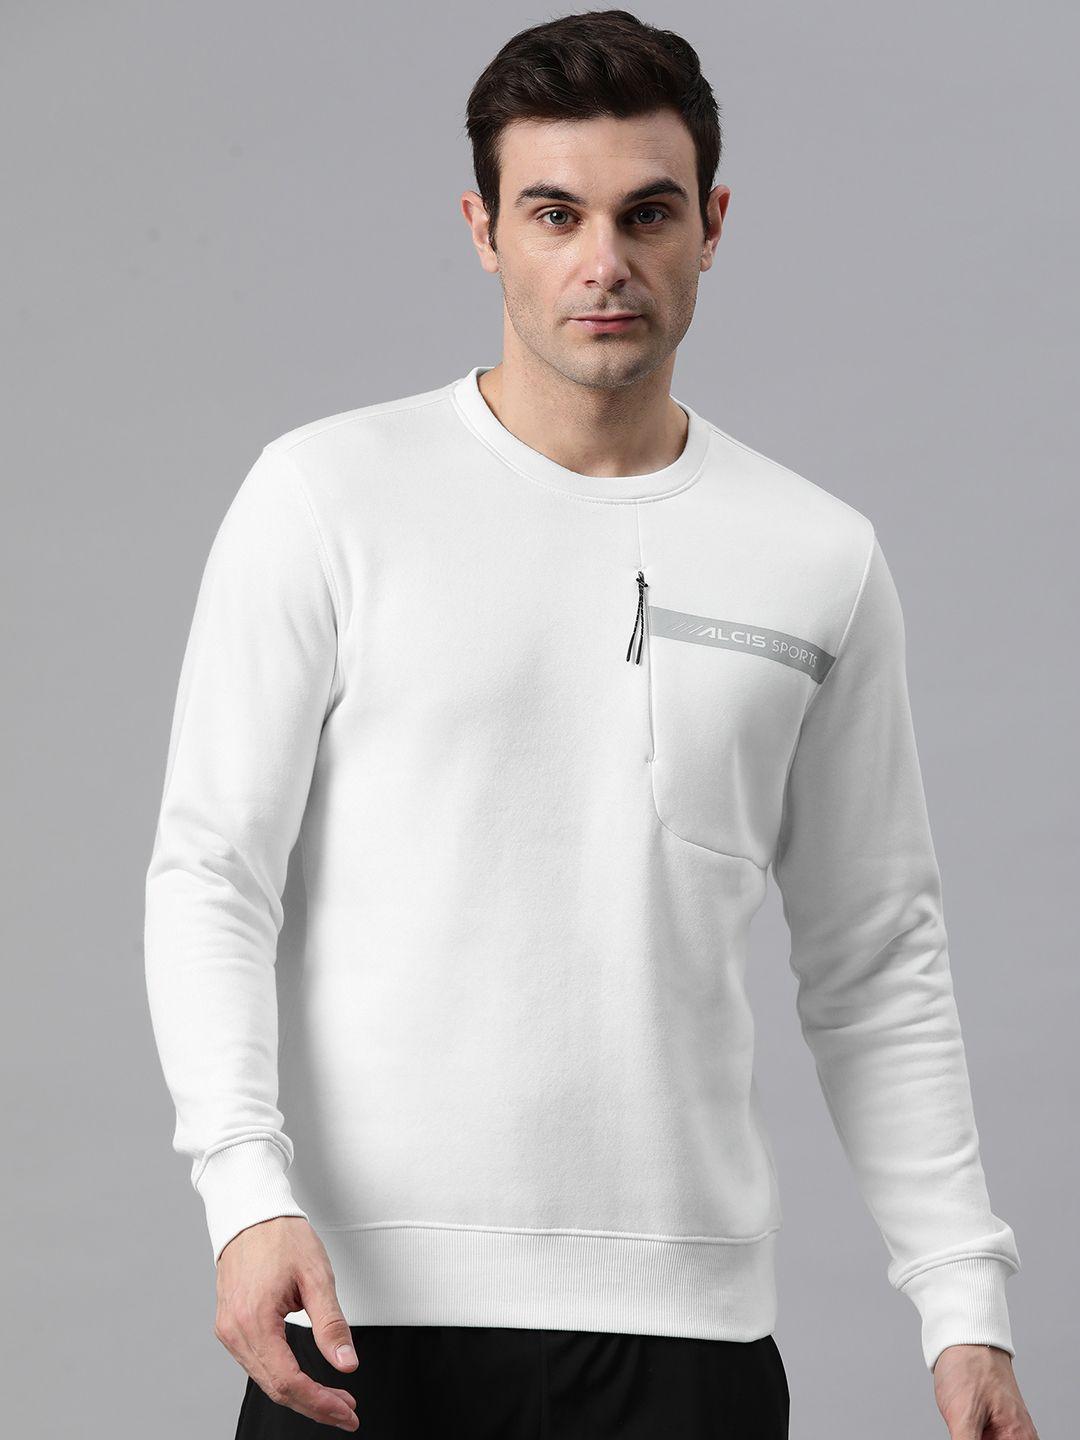 alcis-men-typography-printed-sweatshirt